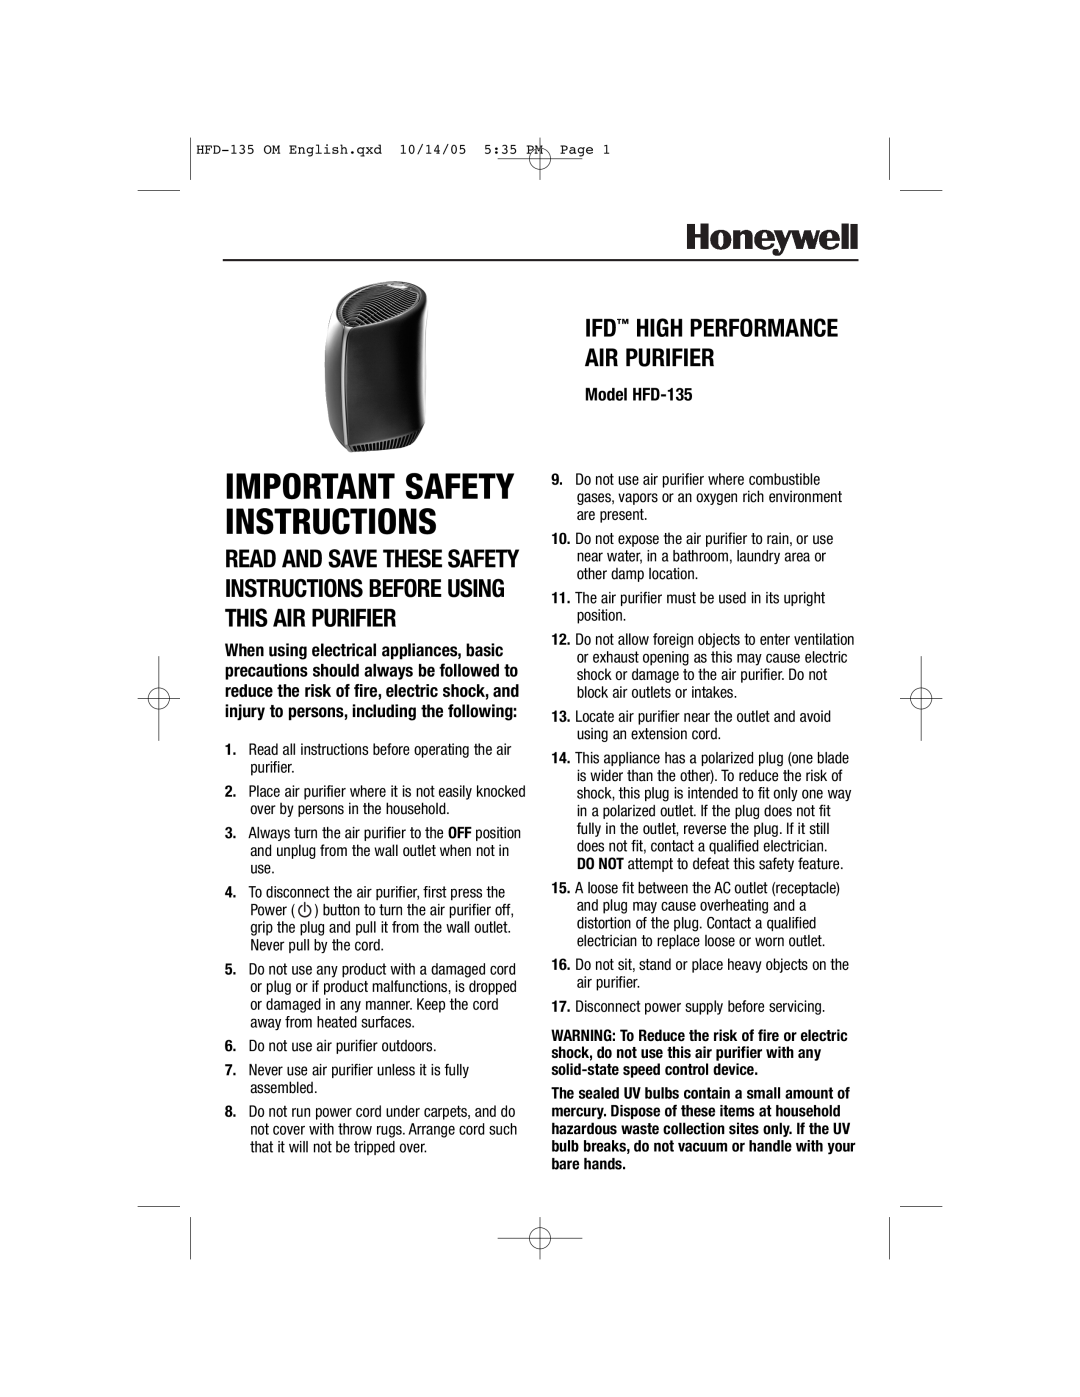 Vicks HFD-135 important safety instructions Important Safety Instructions, Ifd High Performance Air Purifier 